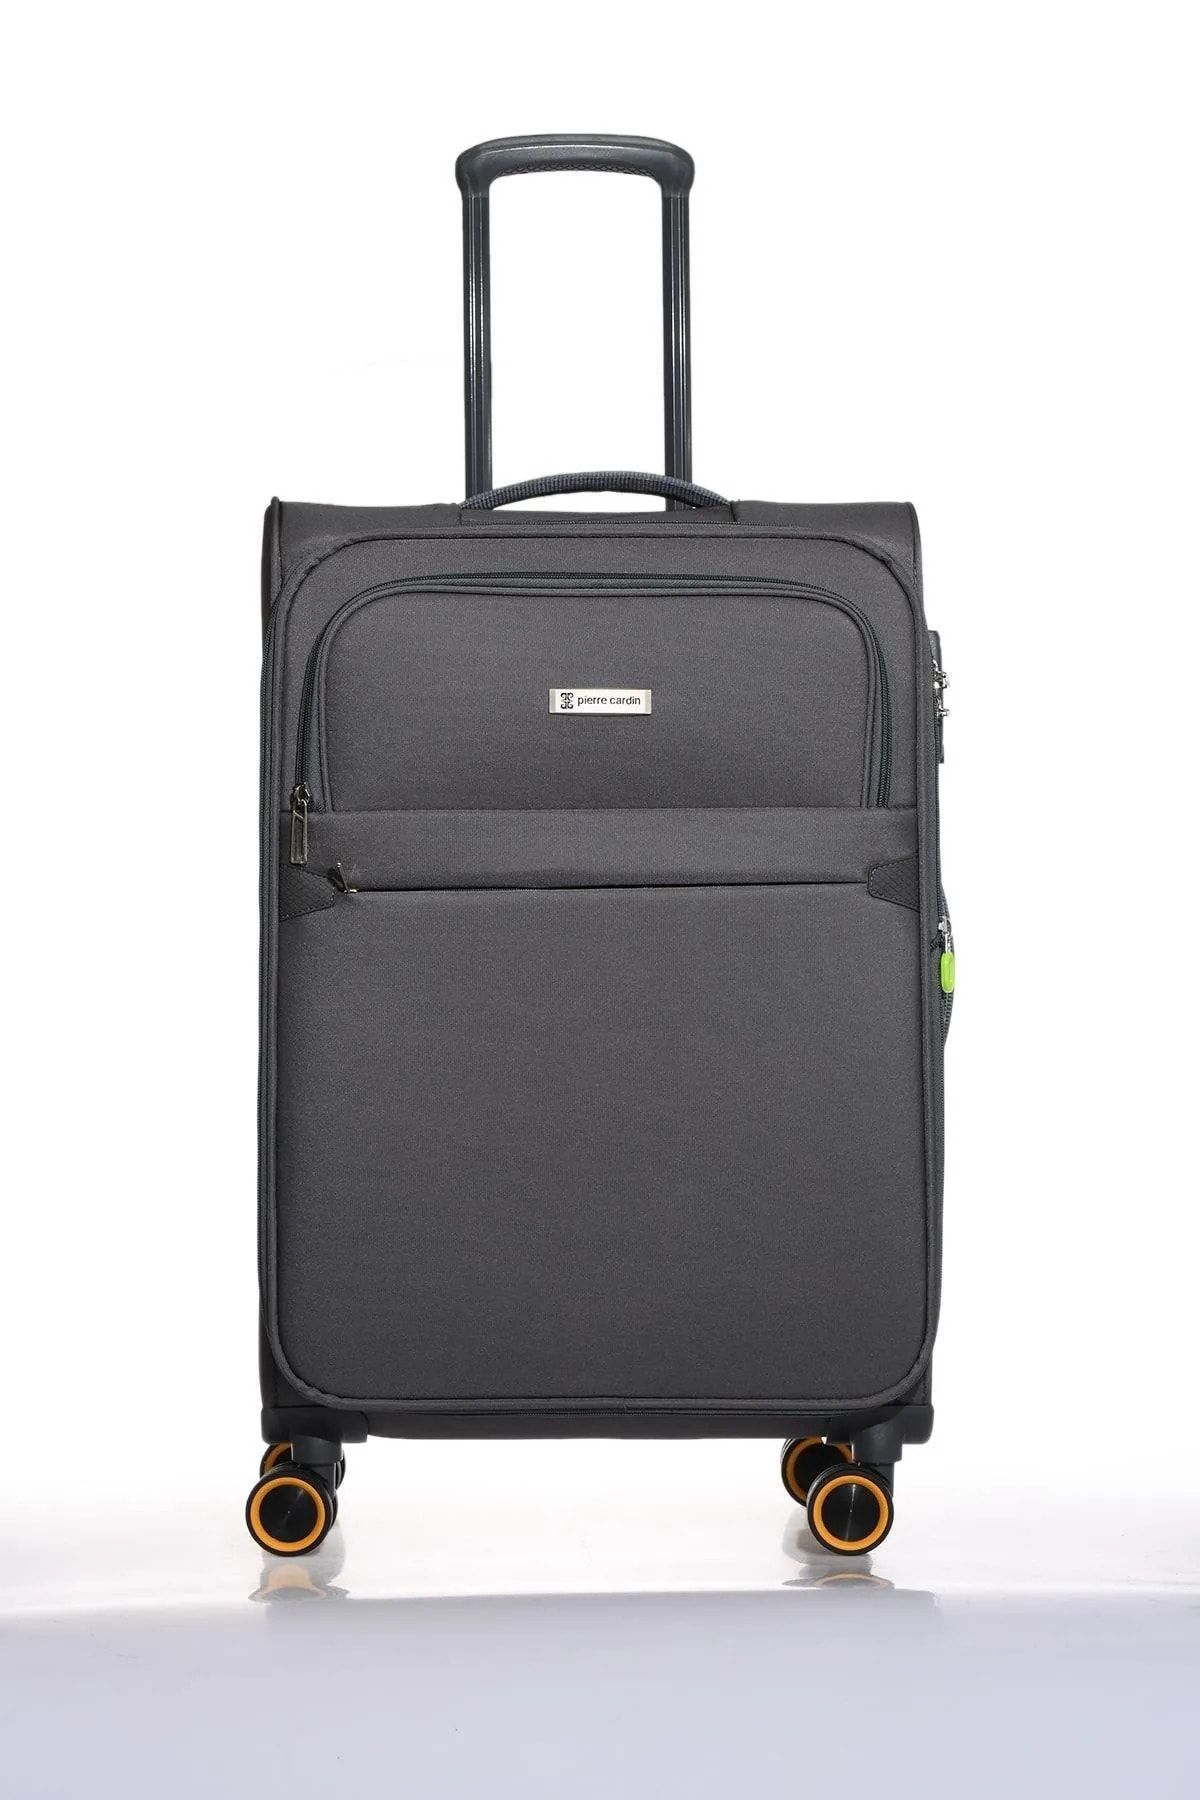 Pierre Cardin چمدان اندازه کابین پارچه ای فوق العاده سبک آنتراسیت